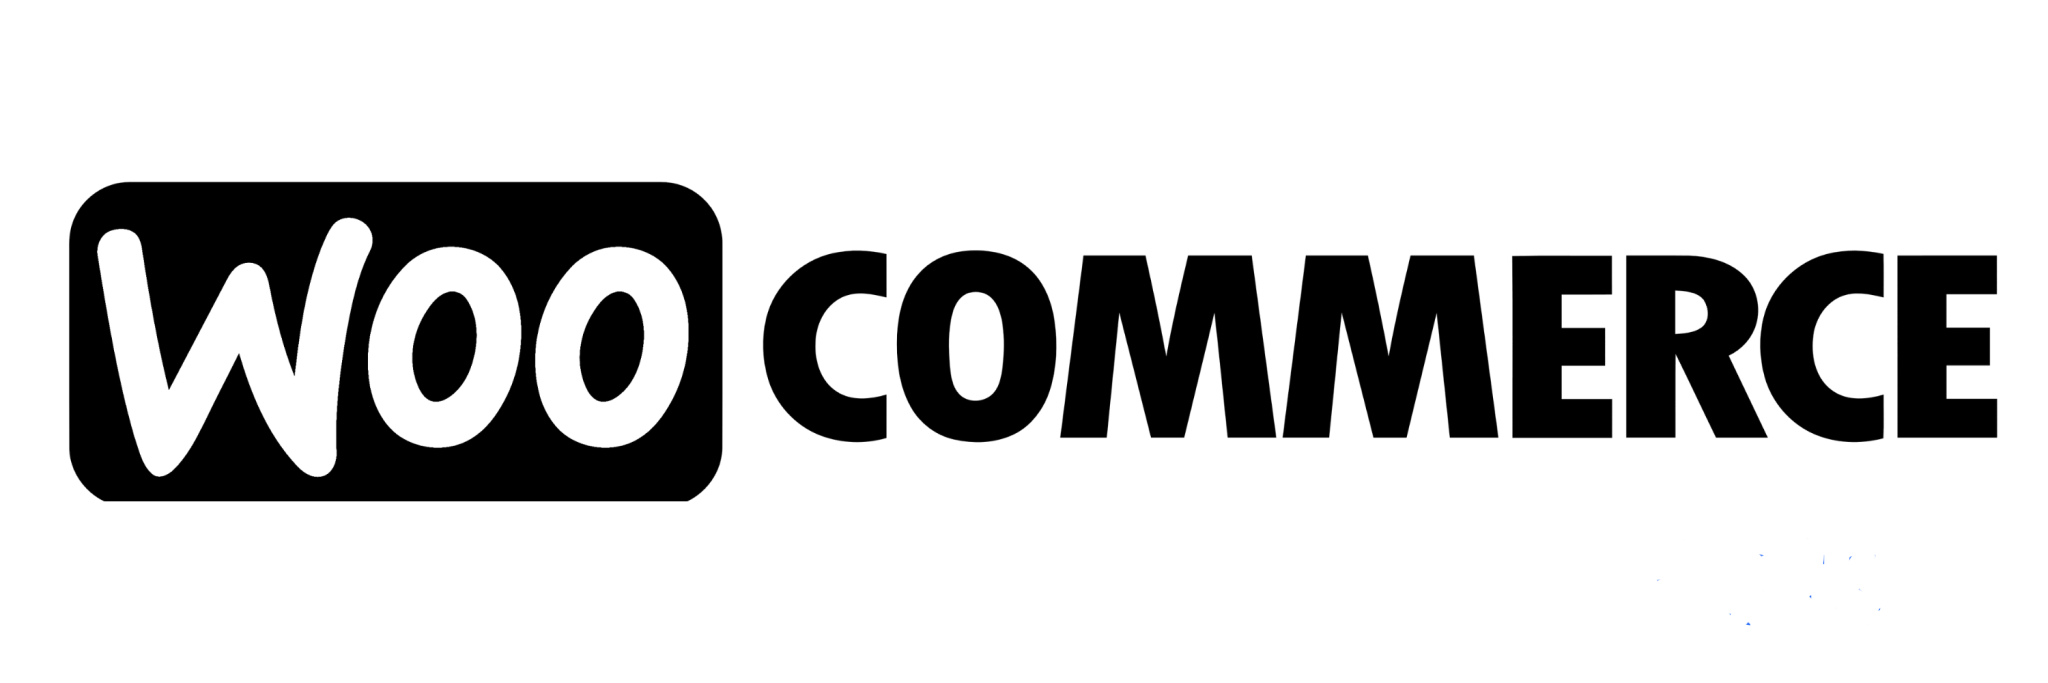 logotipo do woocommerce